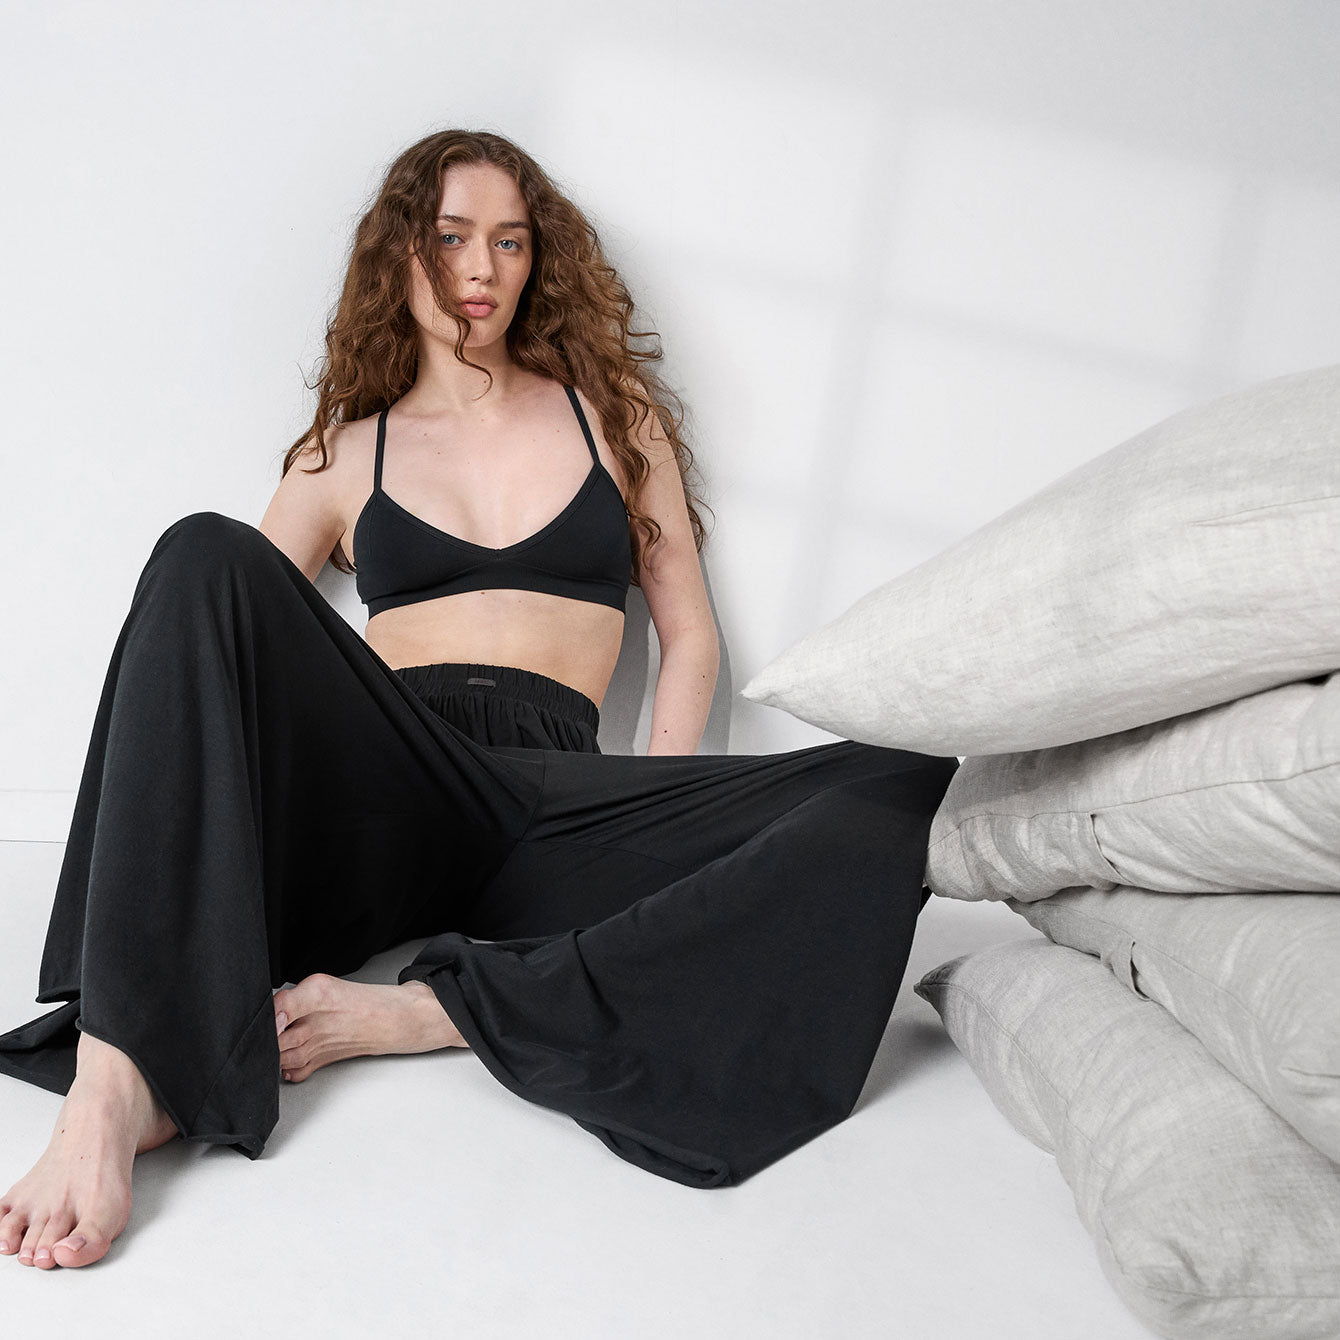 Organic Cotton Wide Leg Lounge Pants – Sandmaiden Sleepwear